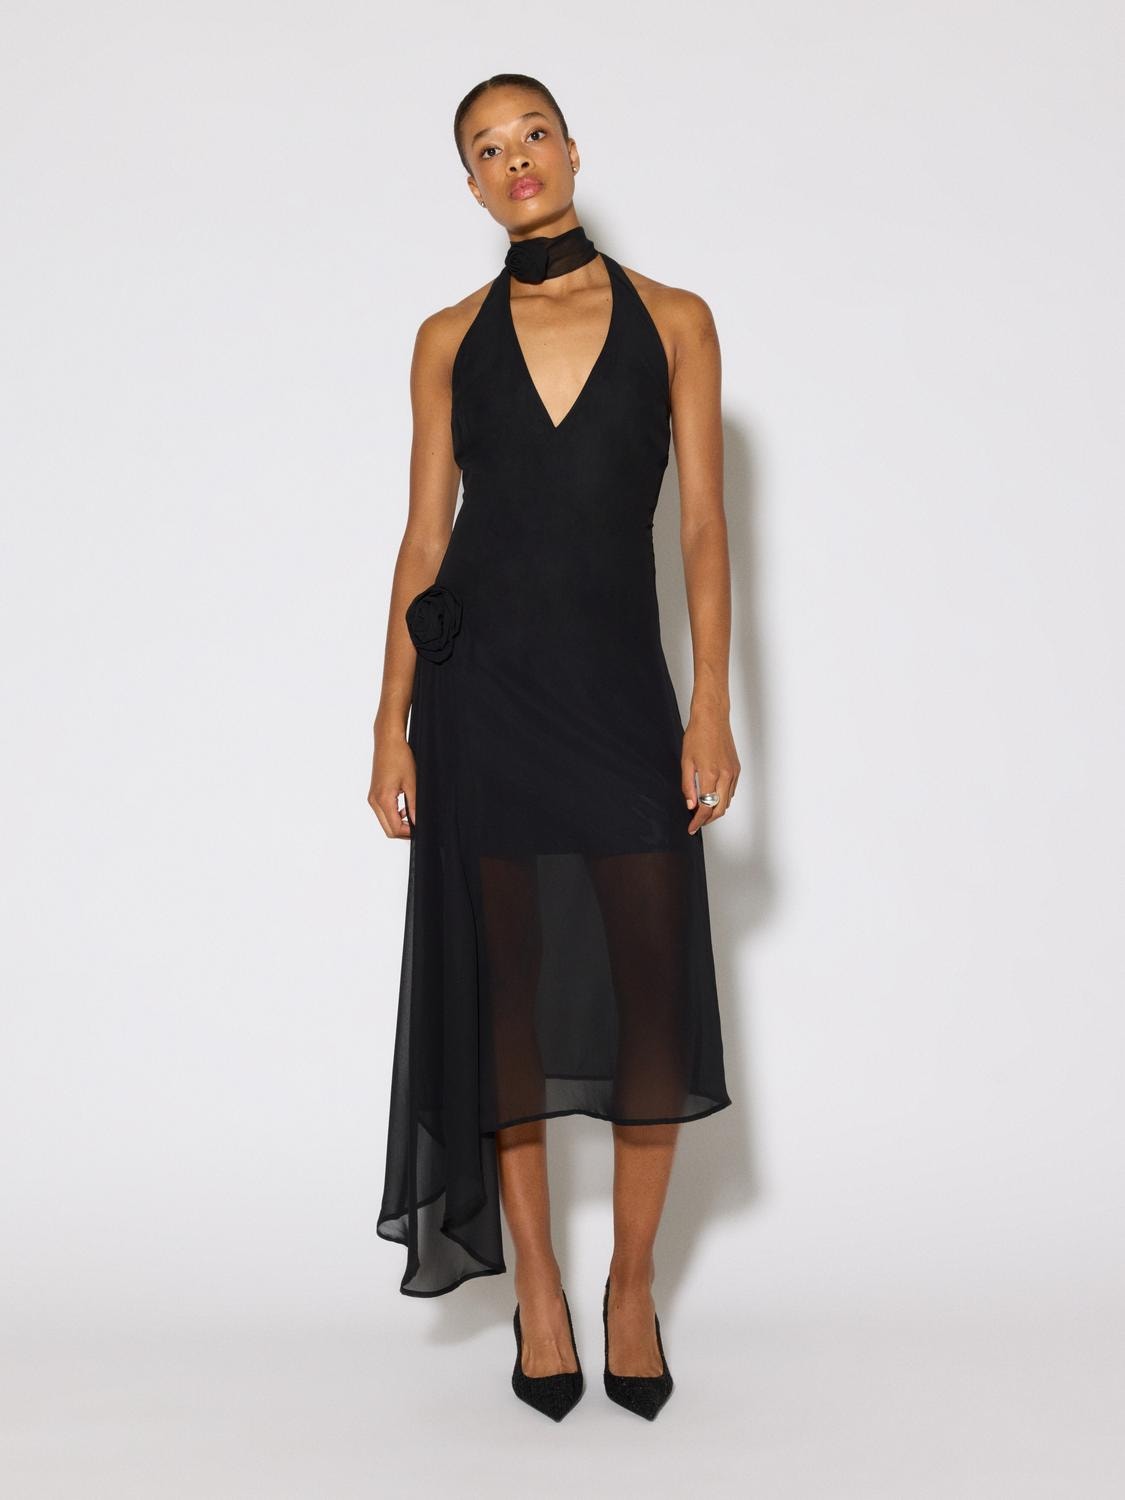 Vero Moda SOMETHINGNEW X LAME COBAIN Long dress -Black - 10299282